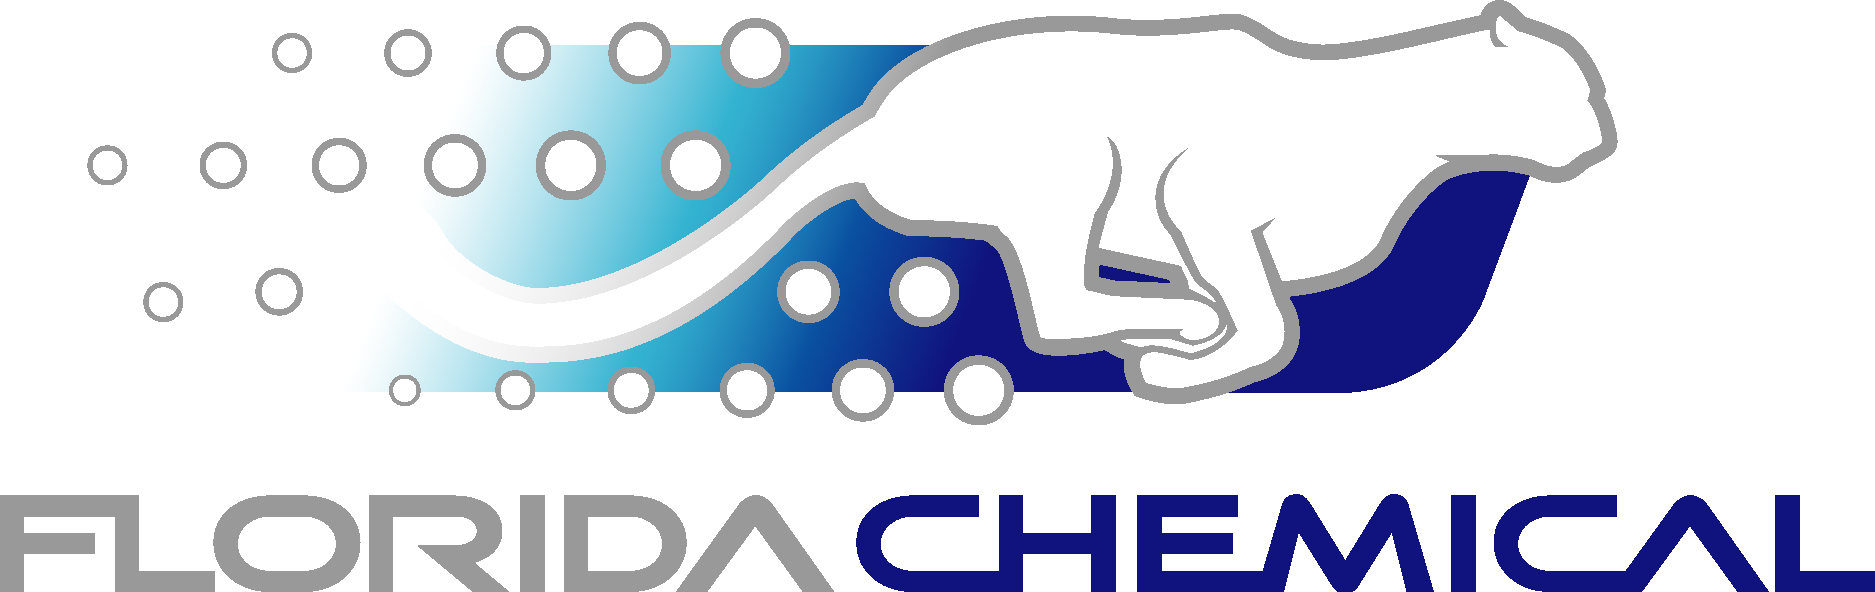 Florida Chemical Logo Vector